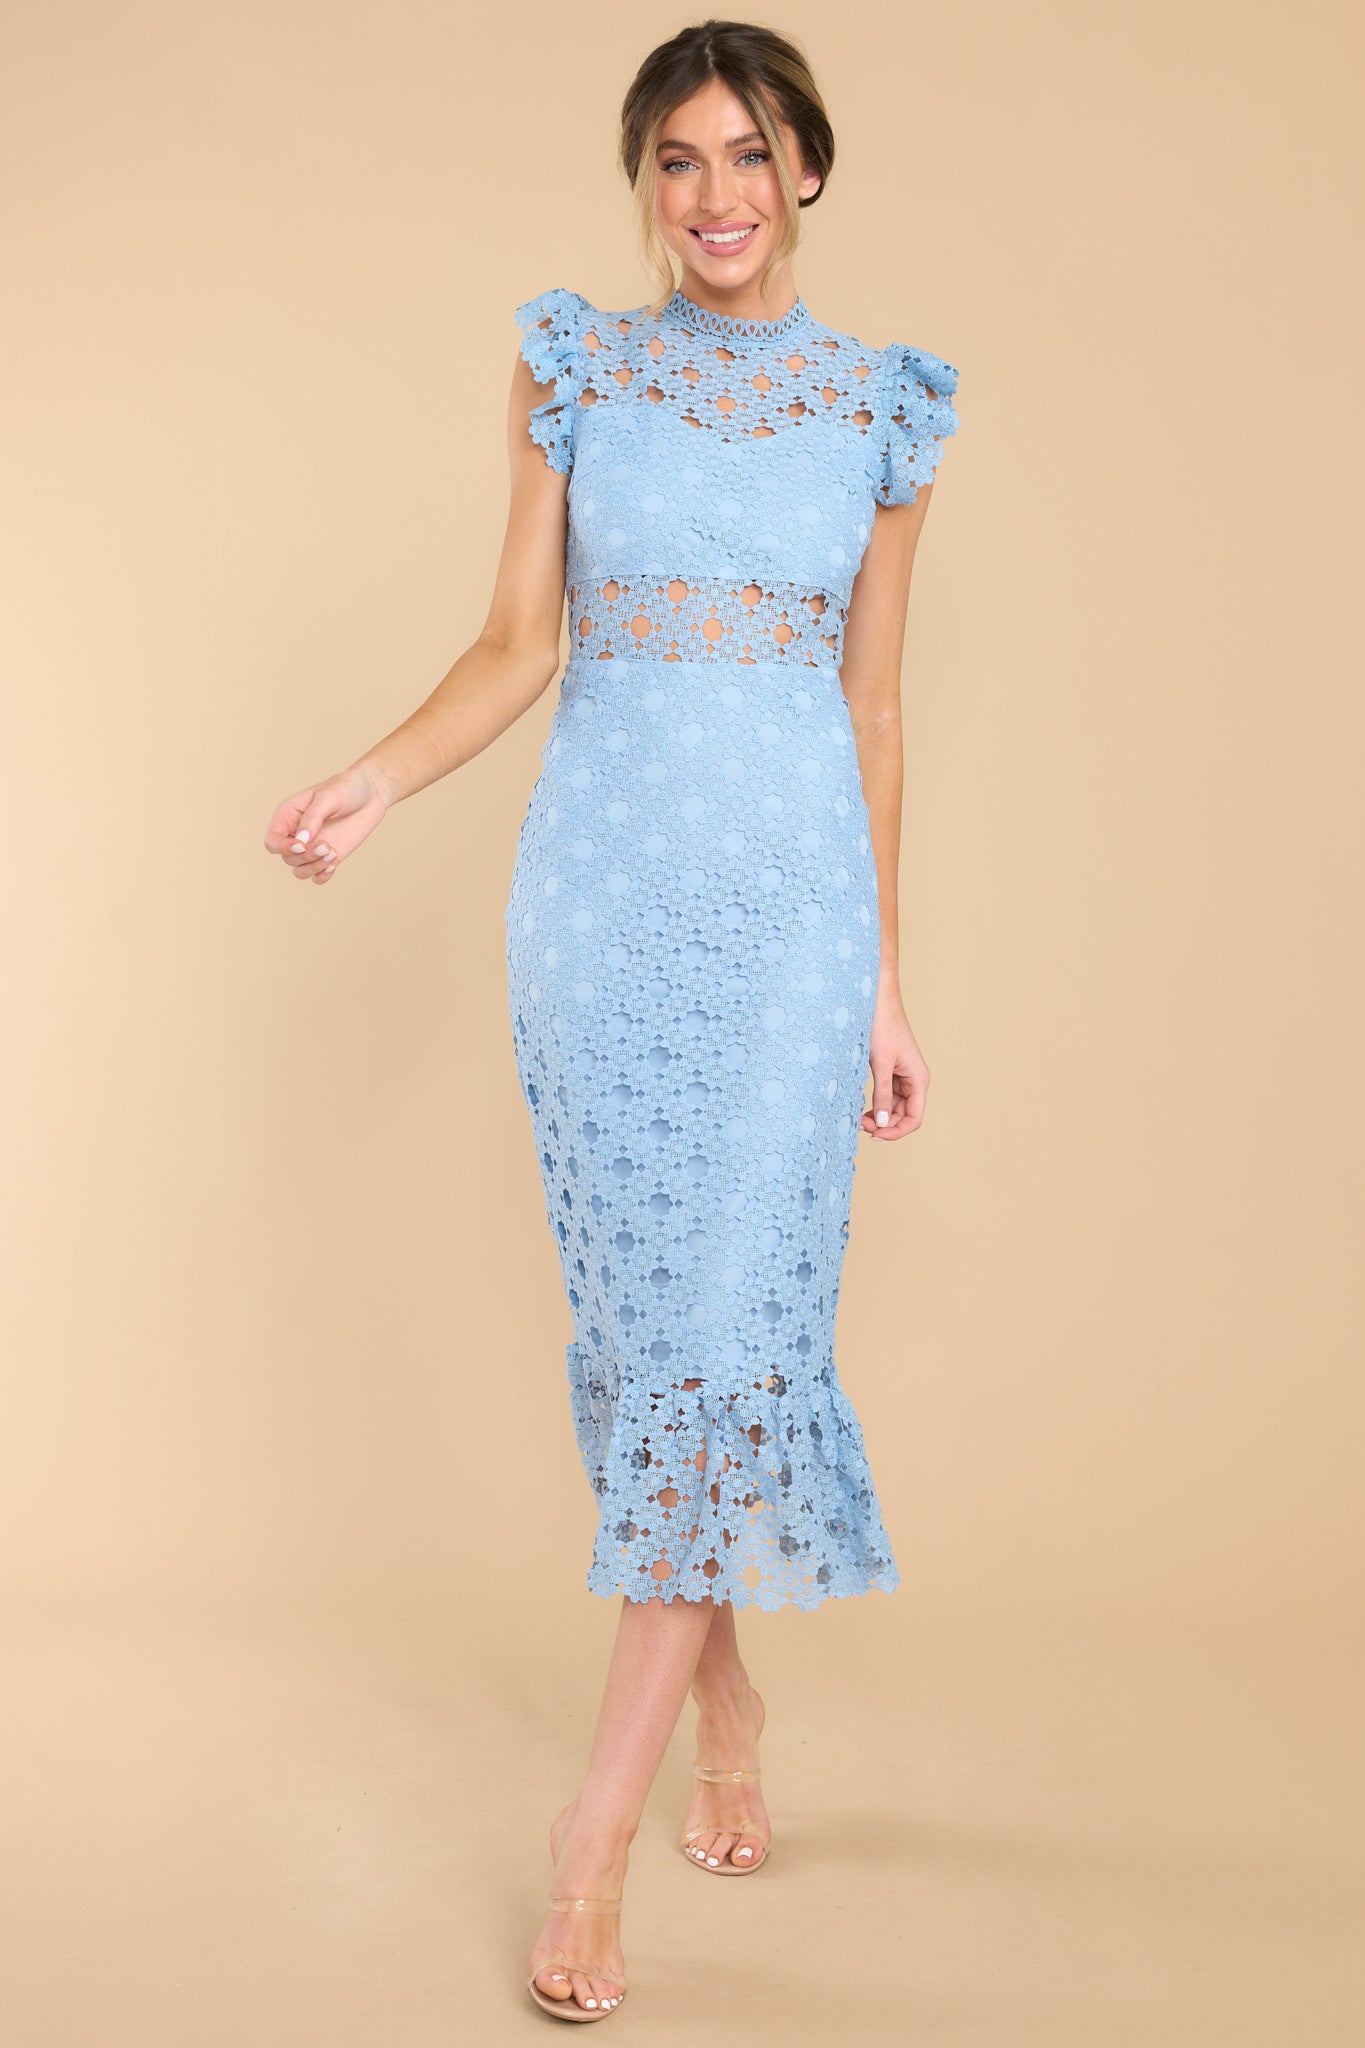 light blue lace dress